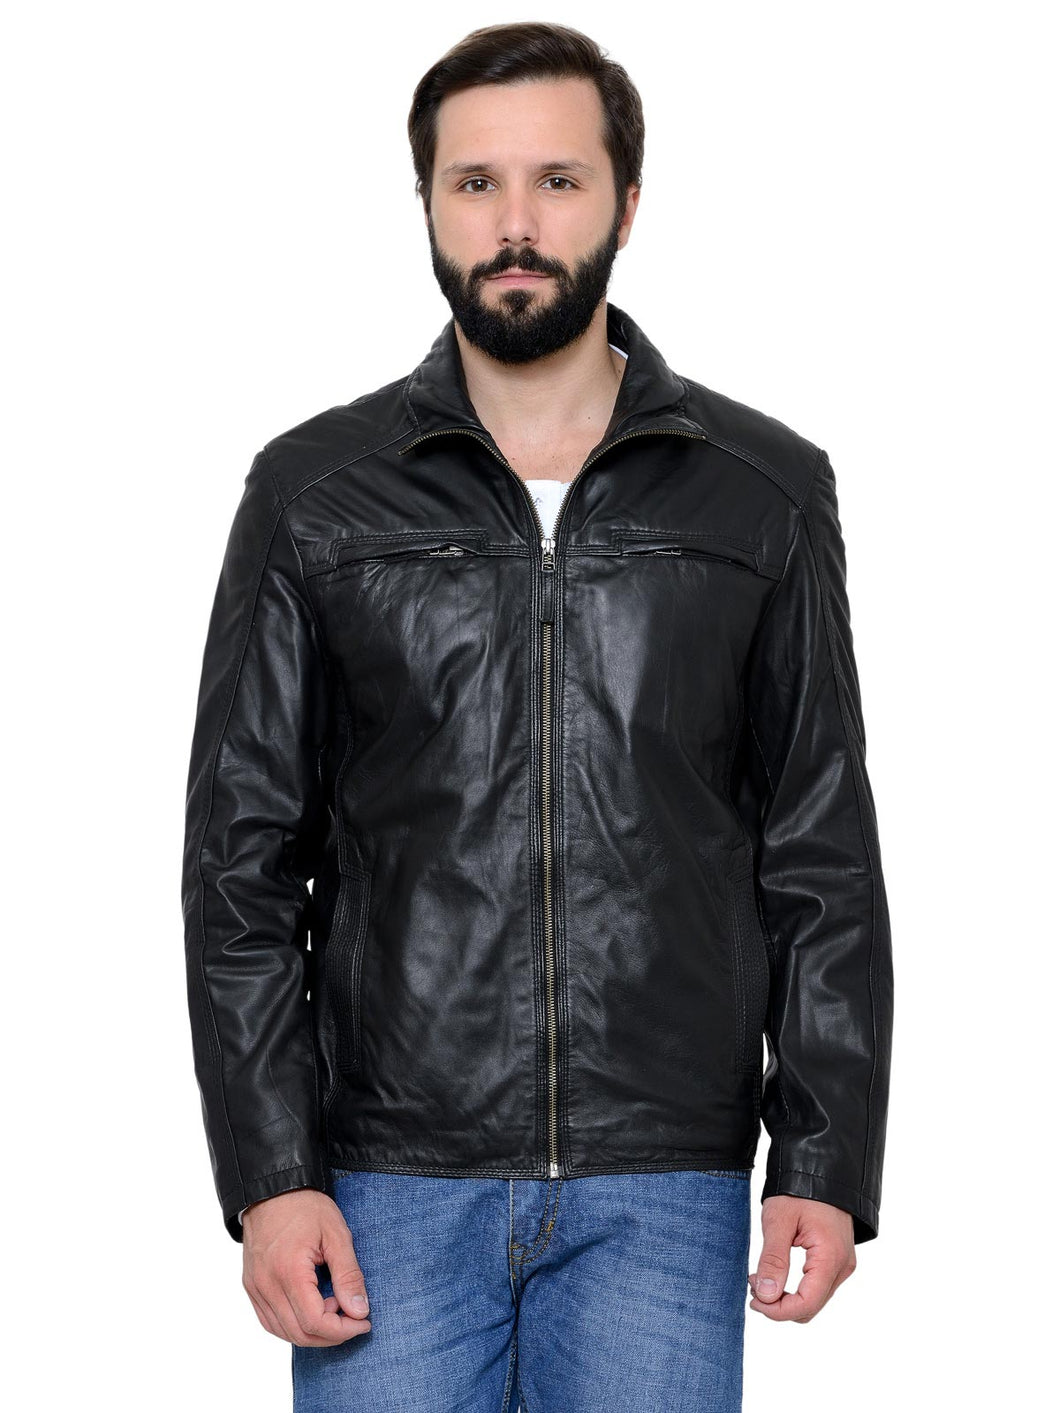 Teakwood Men's Black Leather Jackets